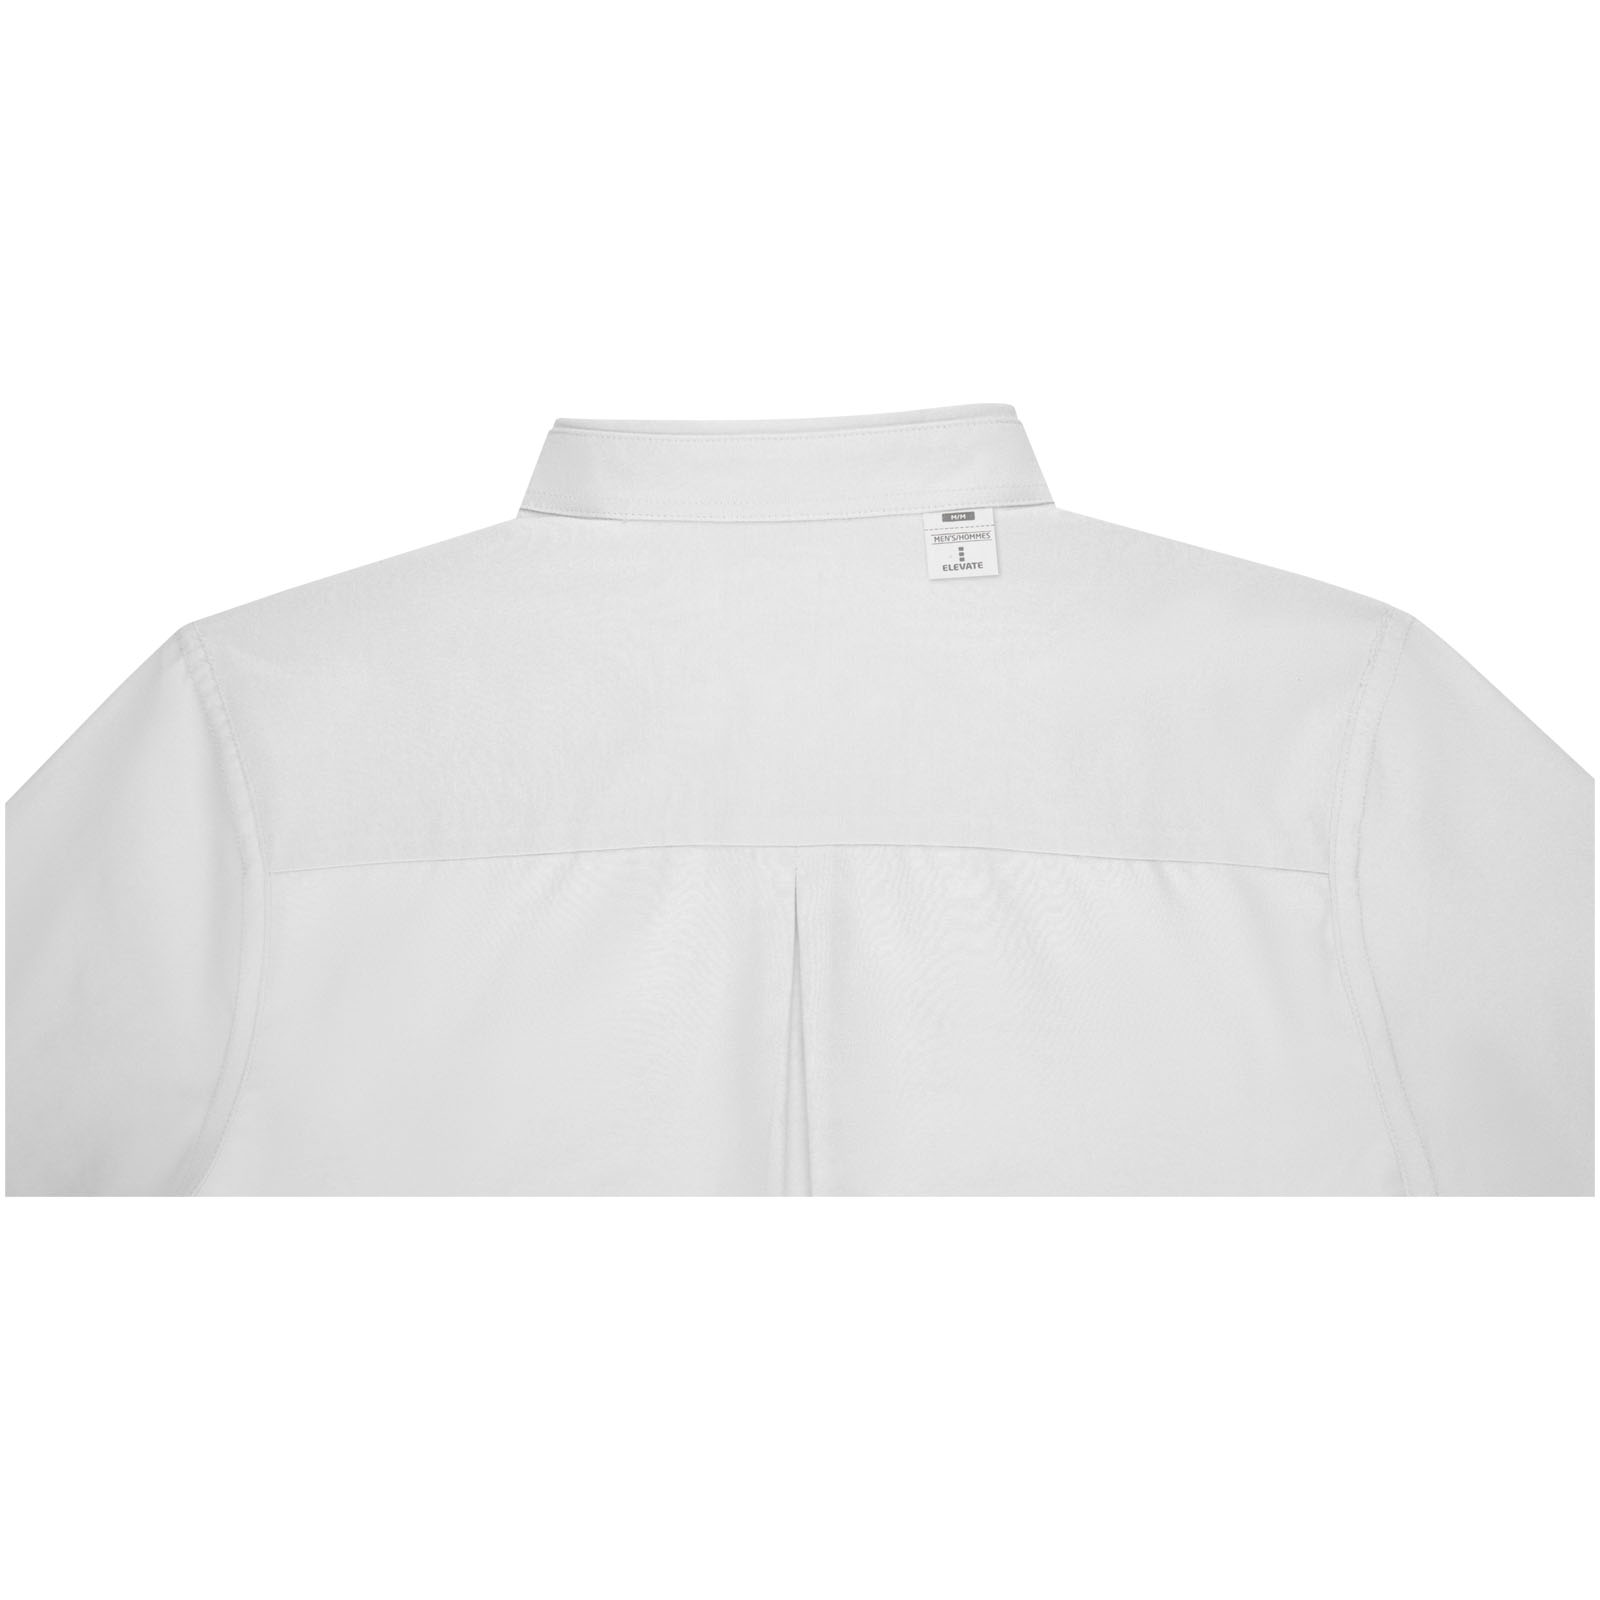 Pollux long sleeve men's shirt